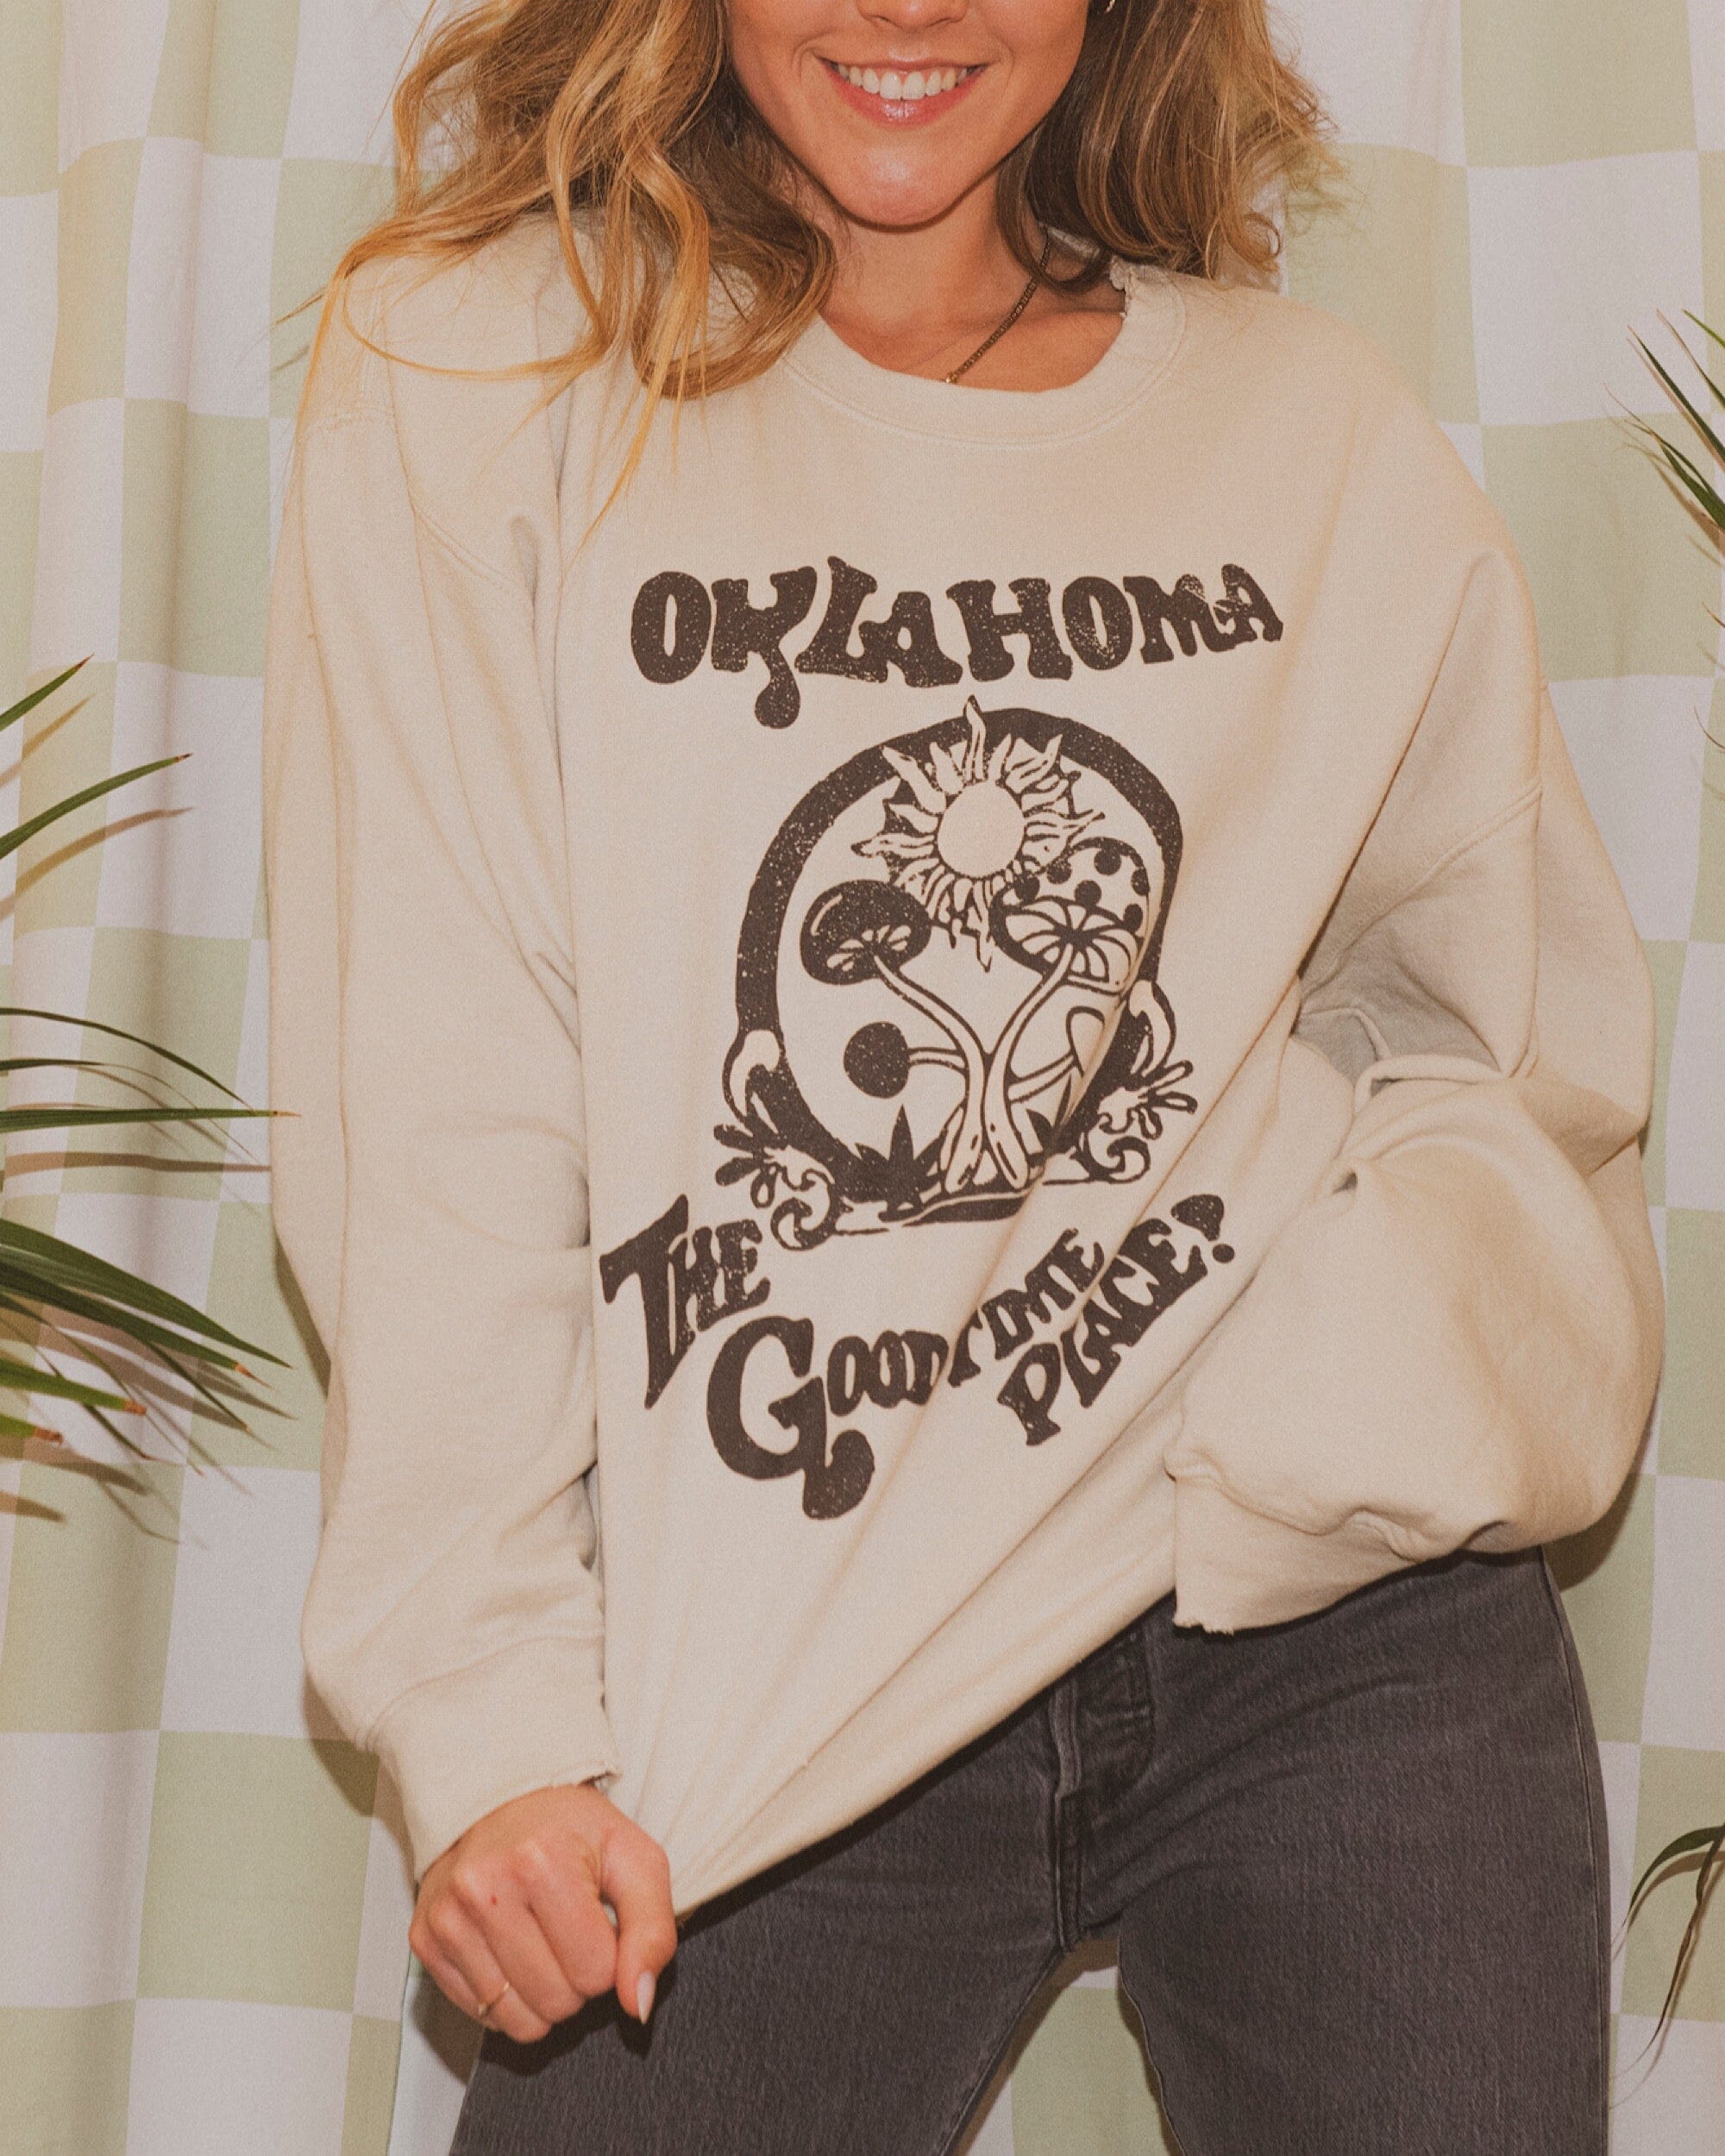 Oklahoma The Good Time Place Sand Thrifted Sweatshirt - shoplivylu